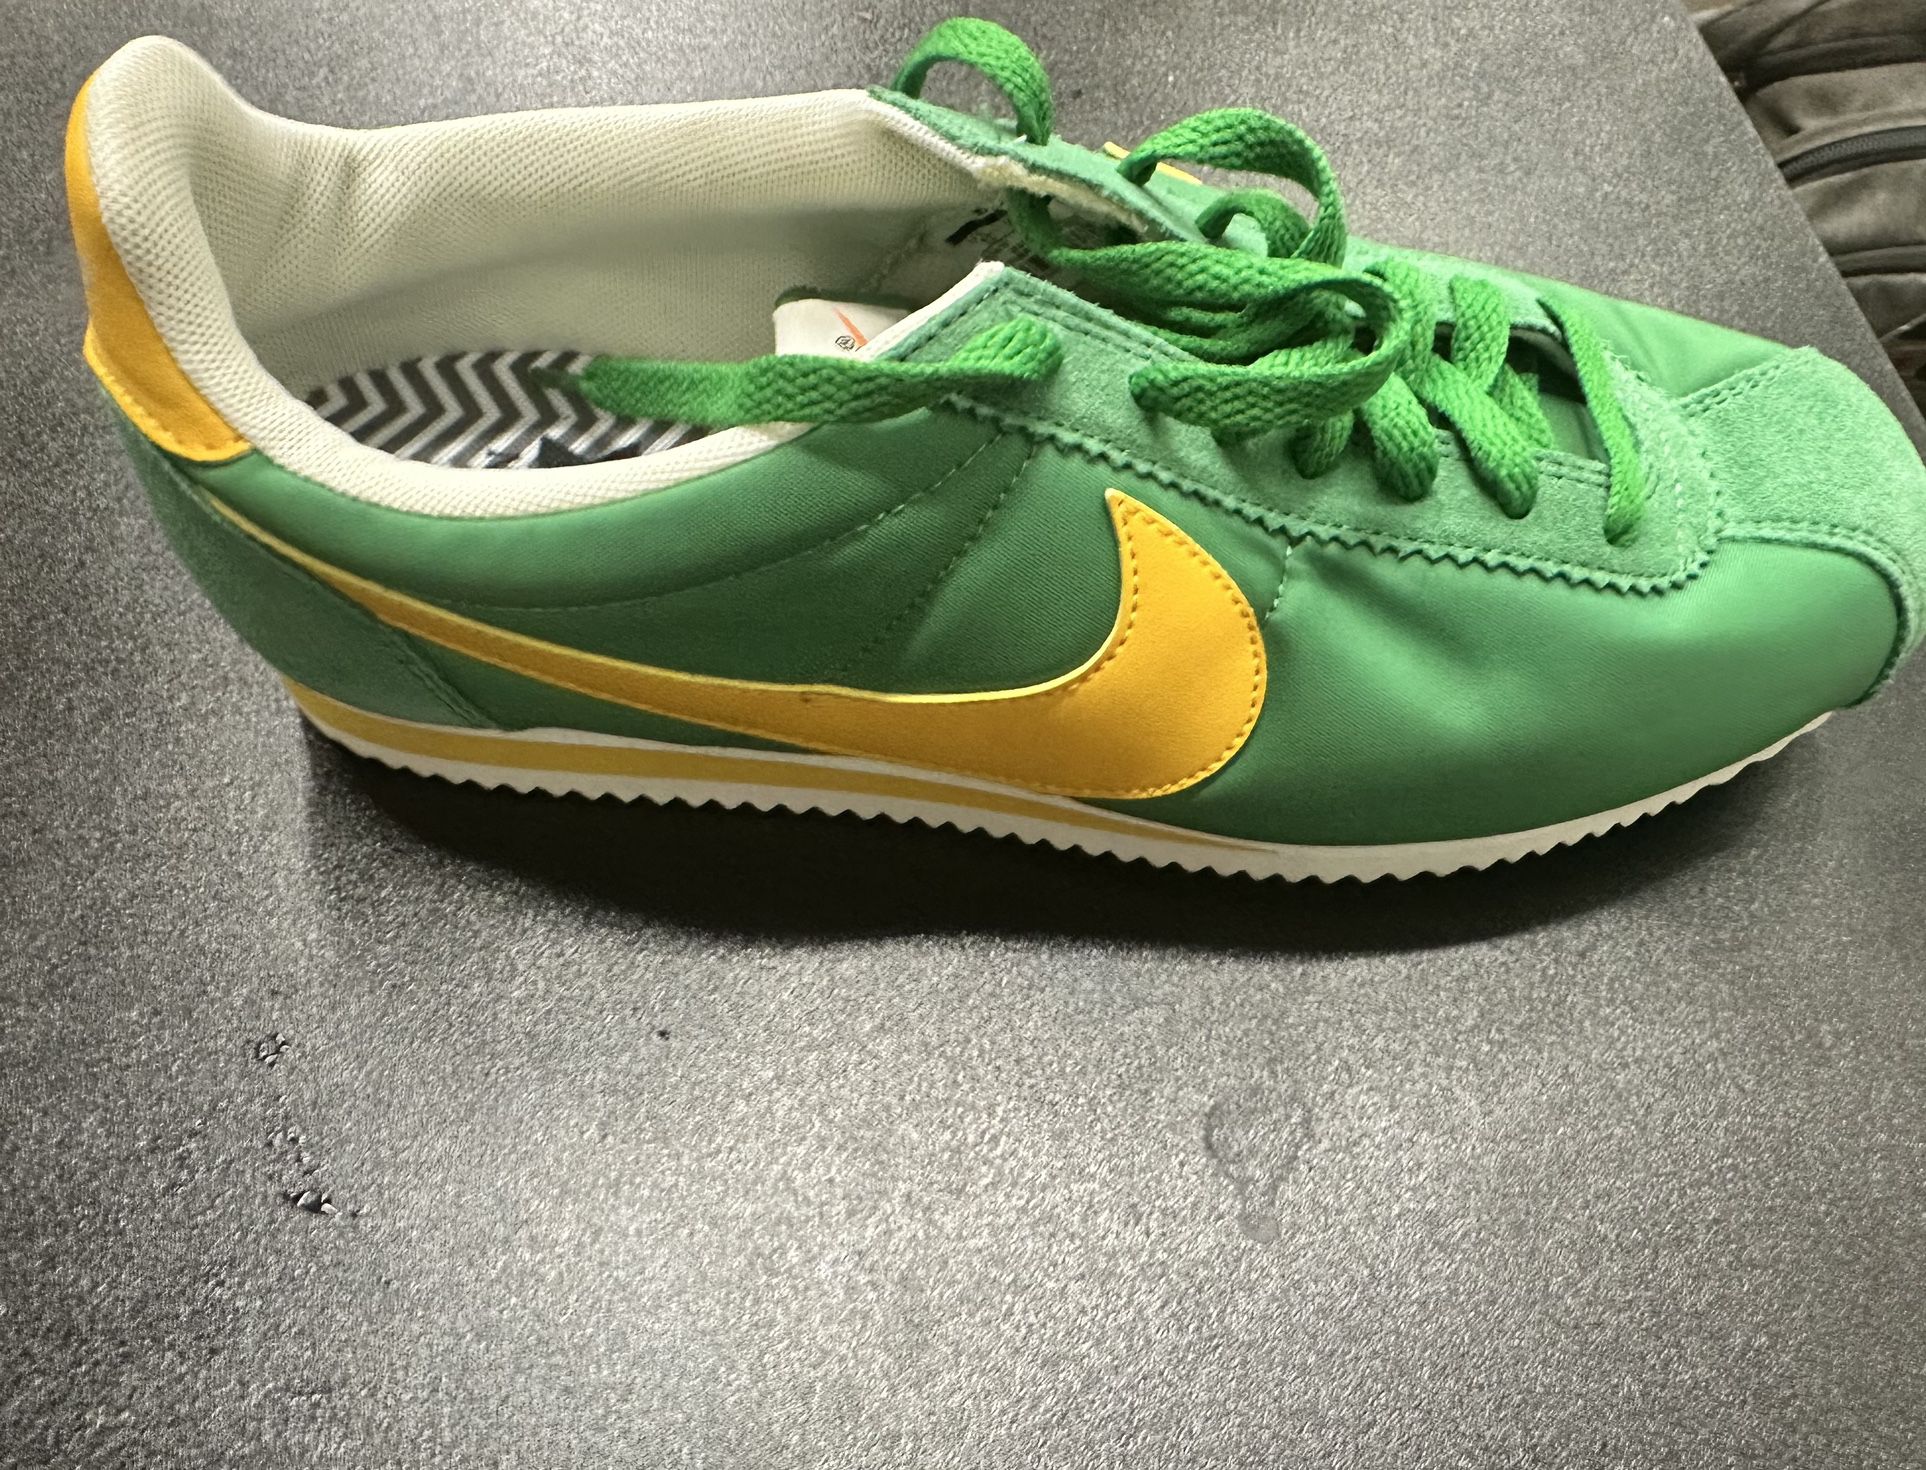 Nike Cortez Shoes Classic Look Green/yellow Swoosh 